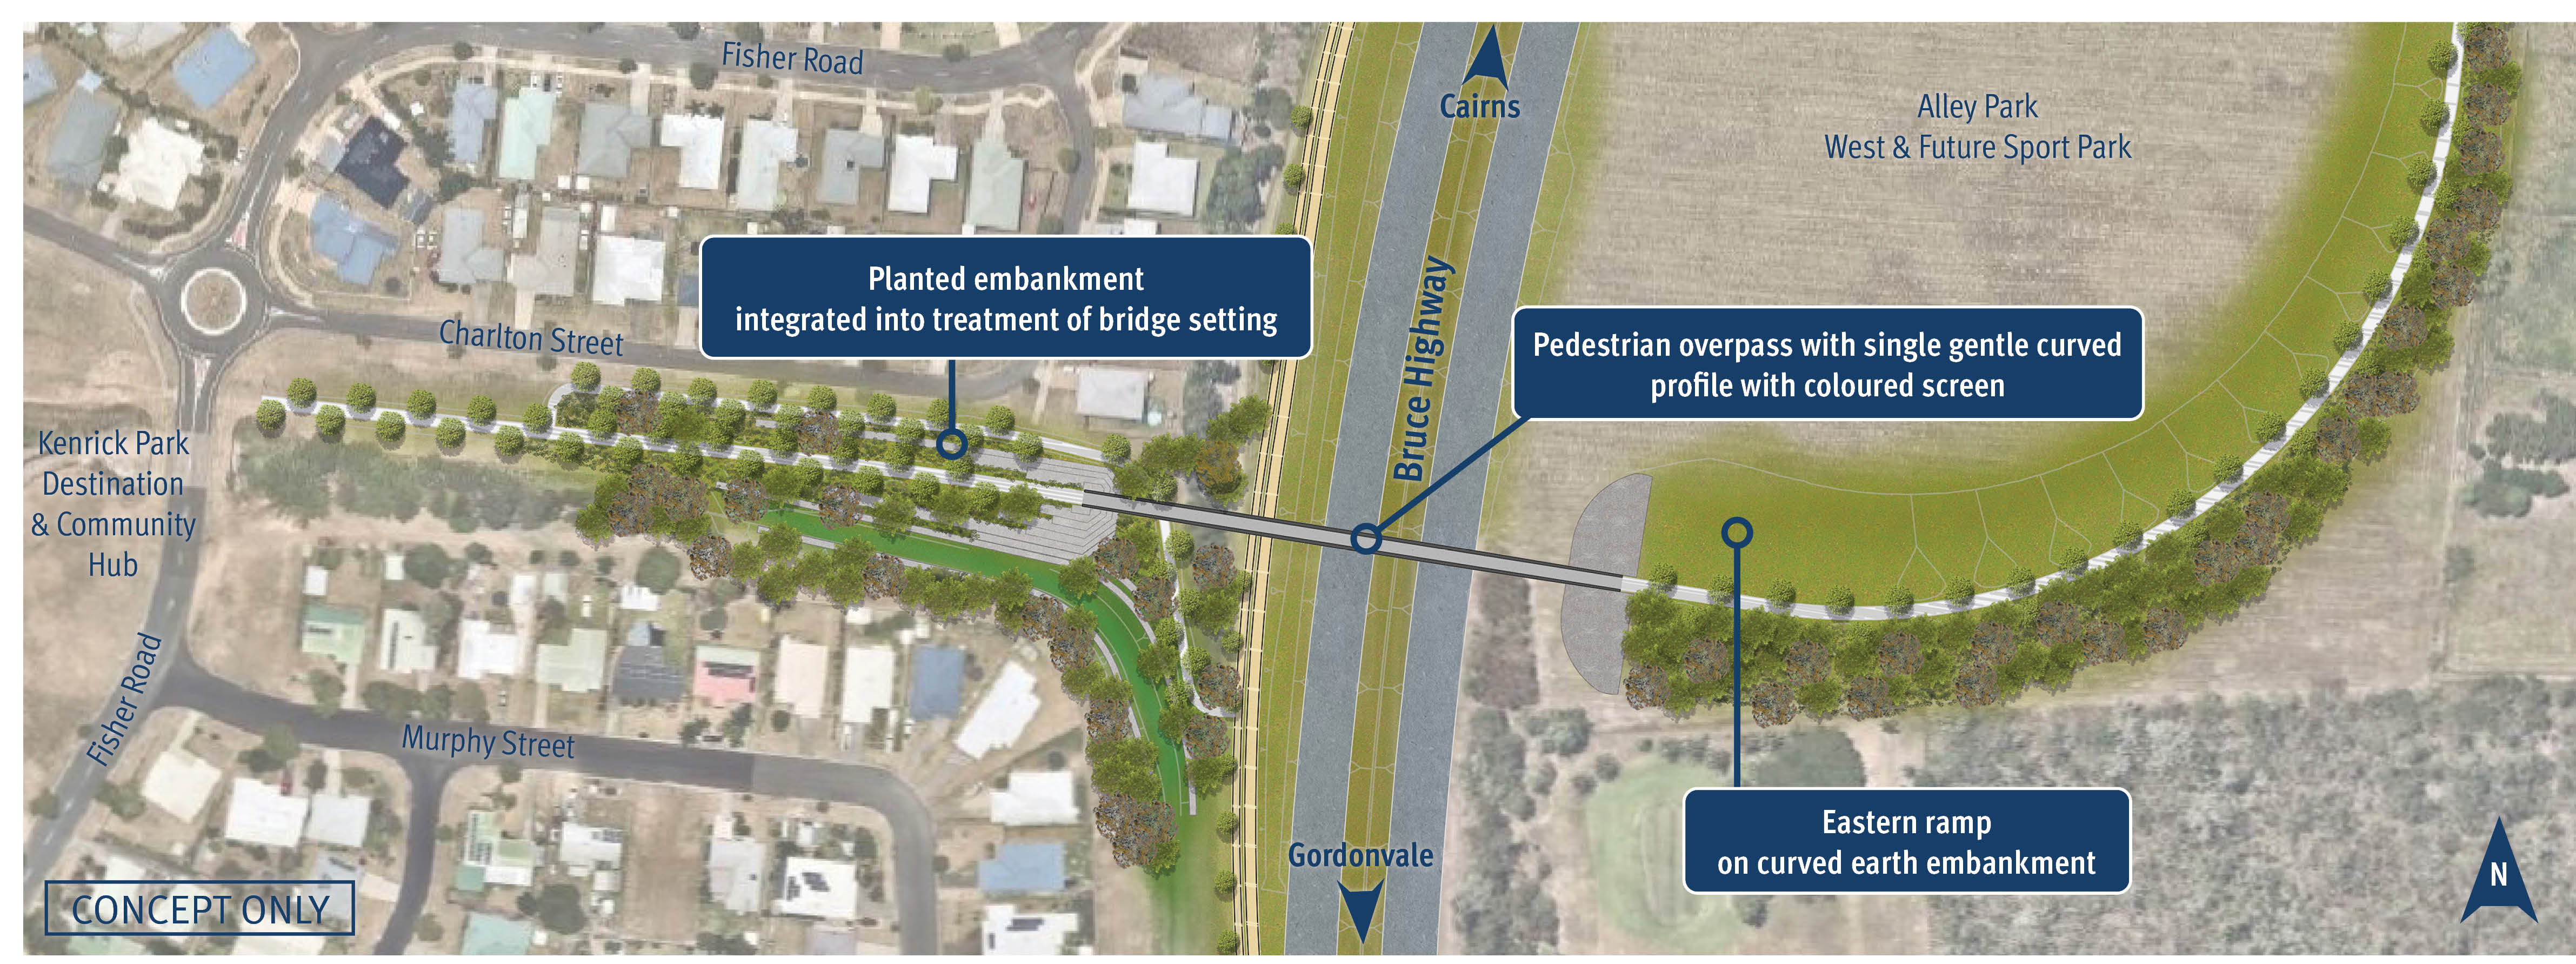 Design concept of Gordonvale pedestrian overpass